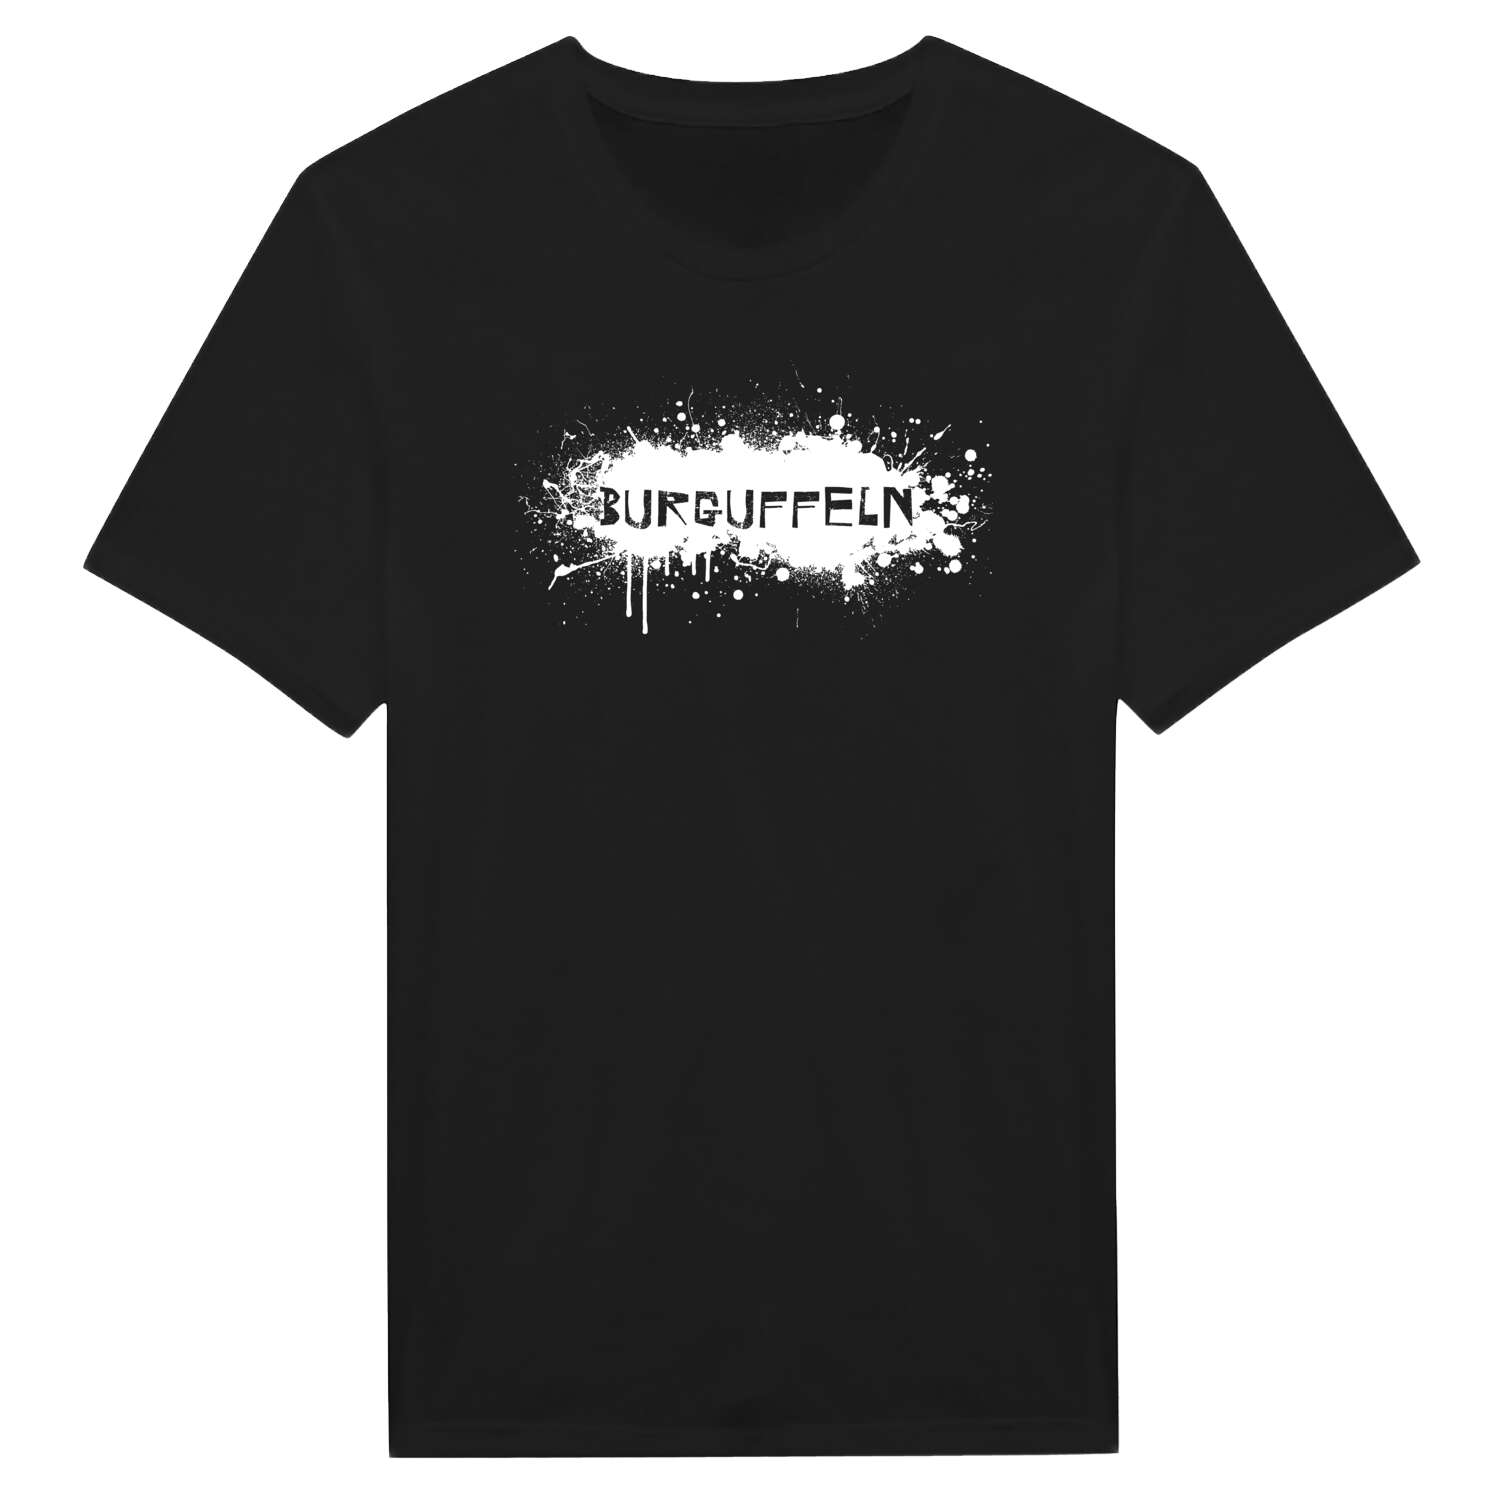 Burguffeln T-Shirt »Paint Splash Punk«